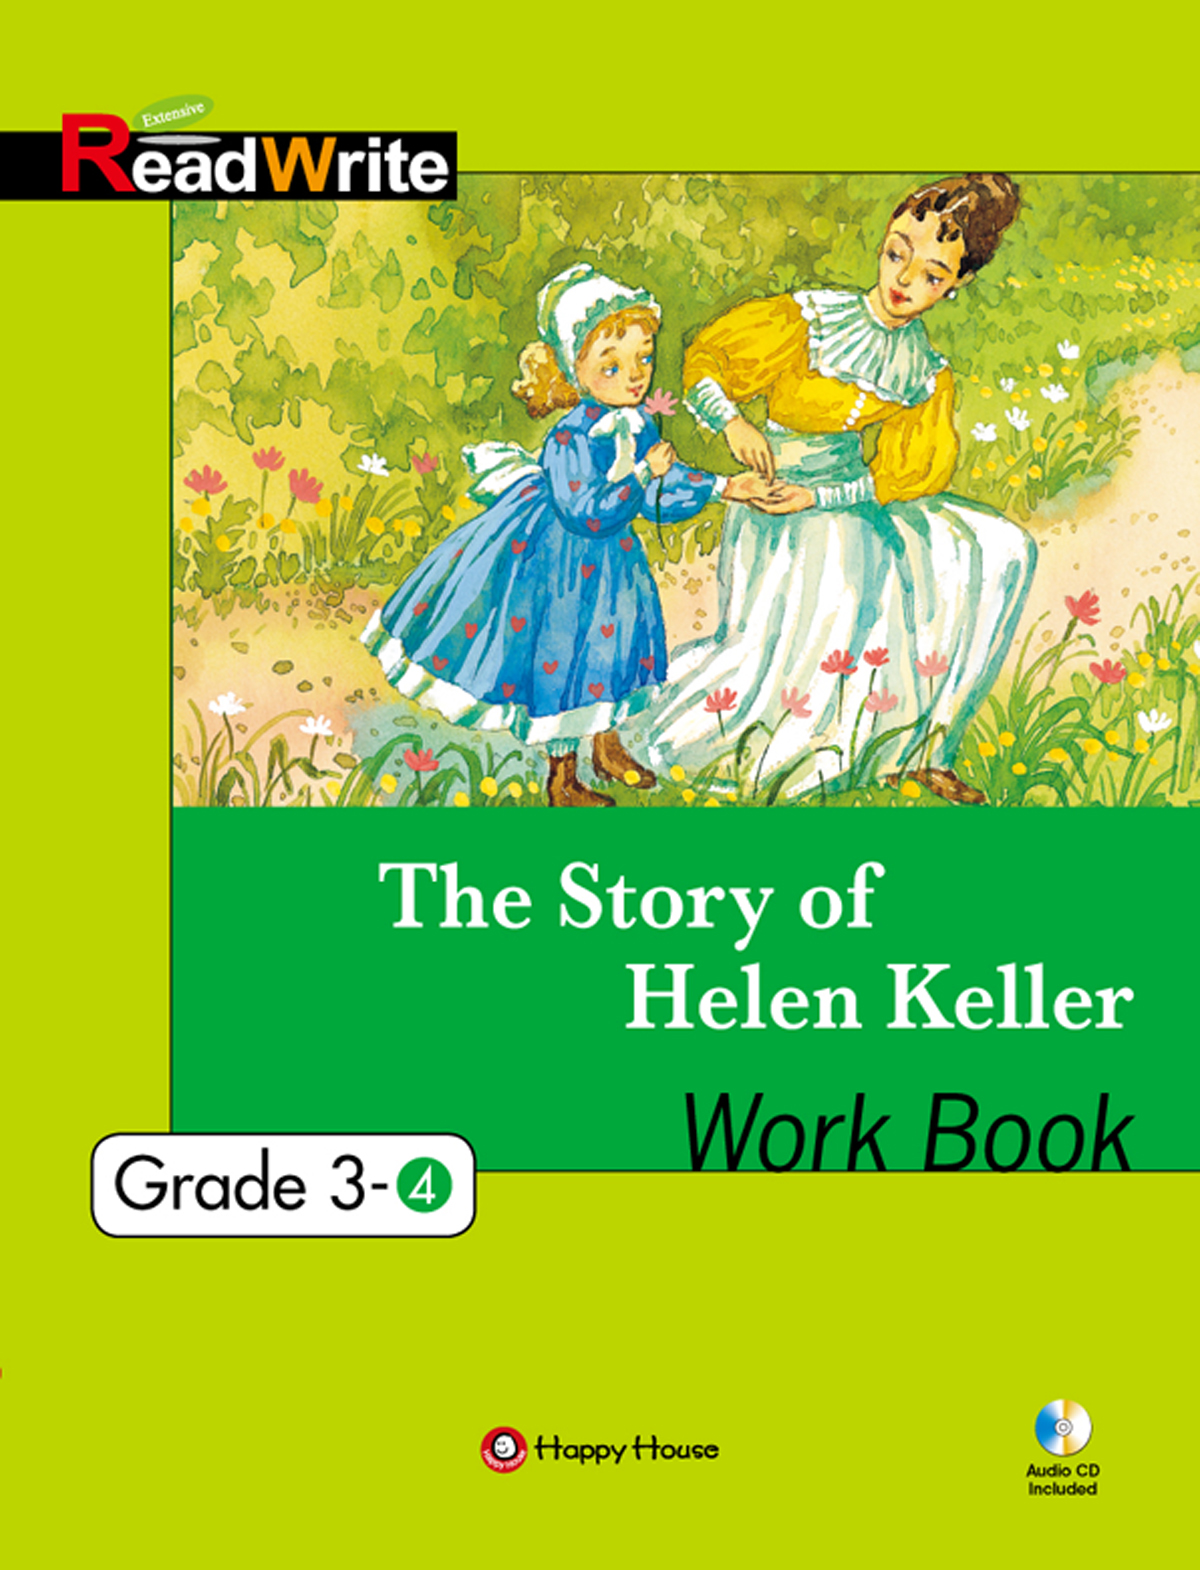 [Extensive ReadWrite] Grade3-4 The Story of Helen Keller